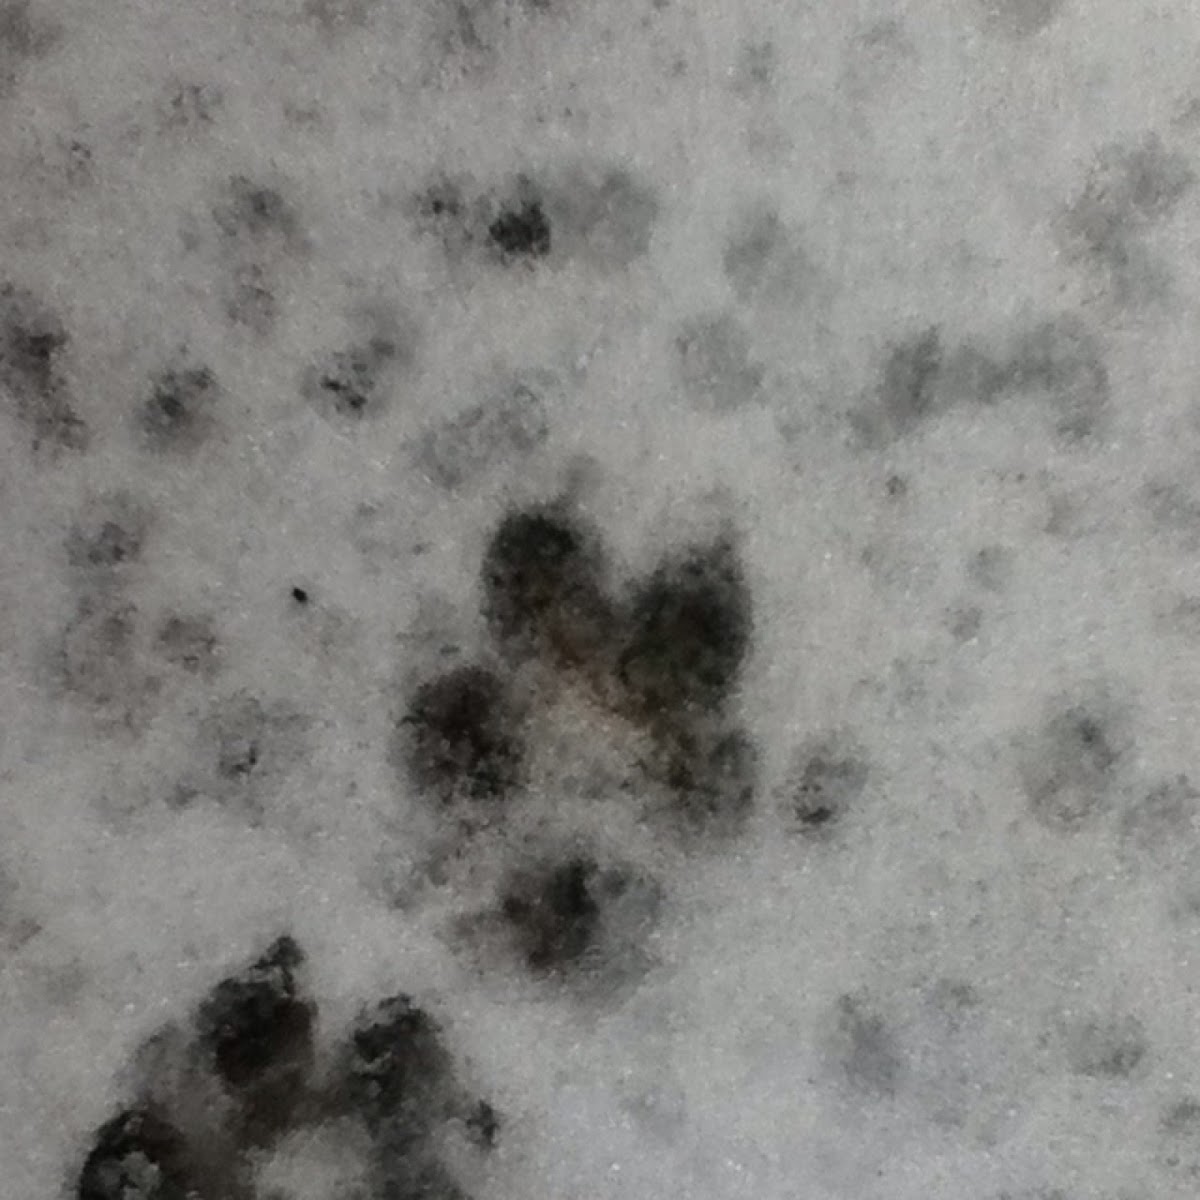 Dog paw print